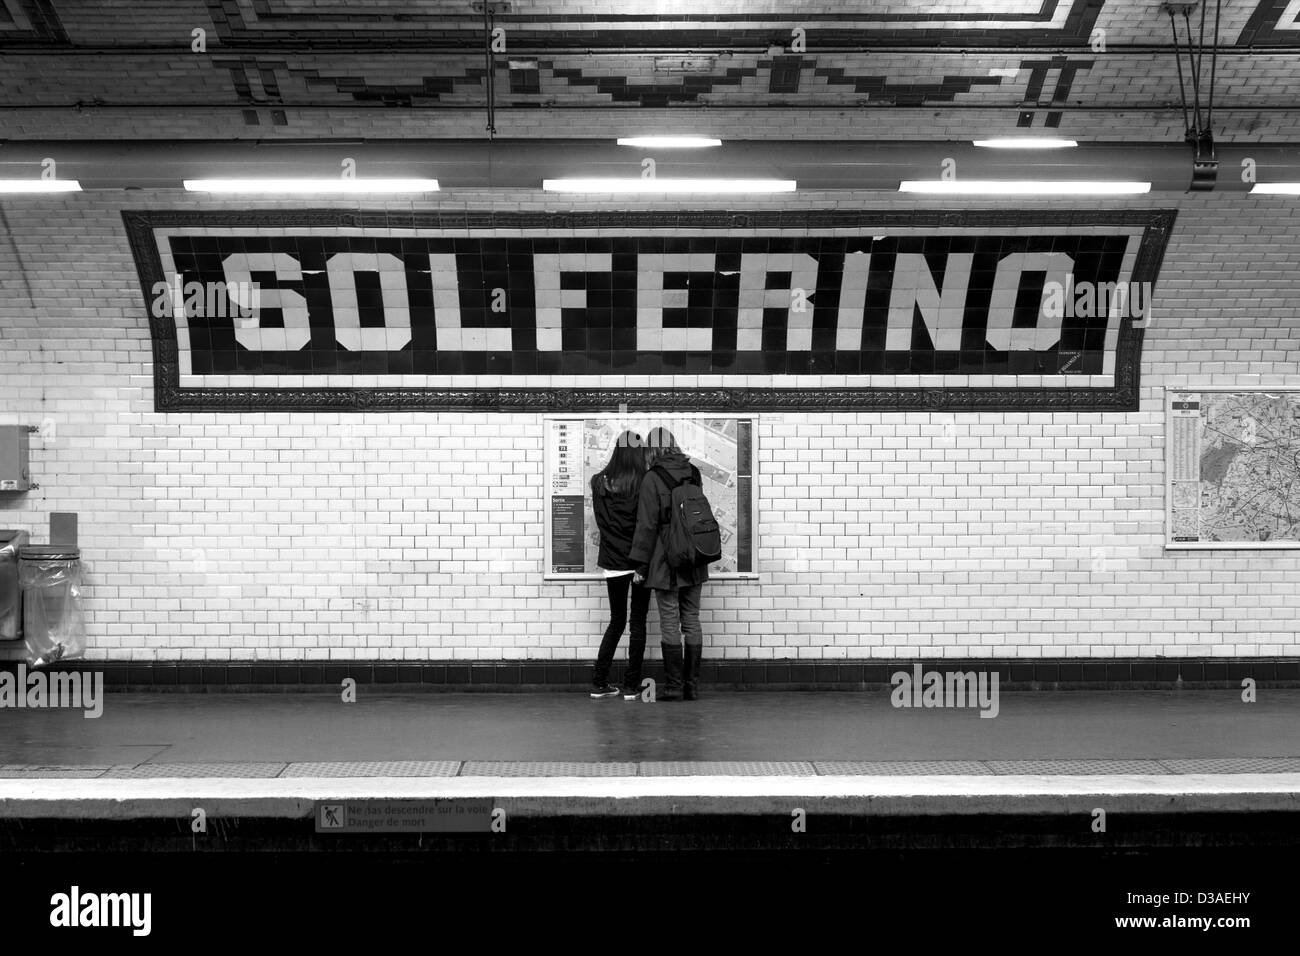 Solferino stop on the Paris Metro. Stock Photo